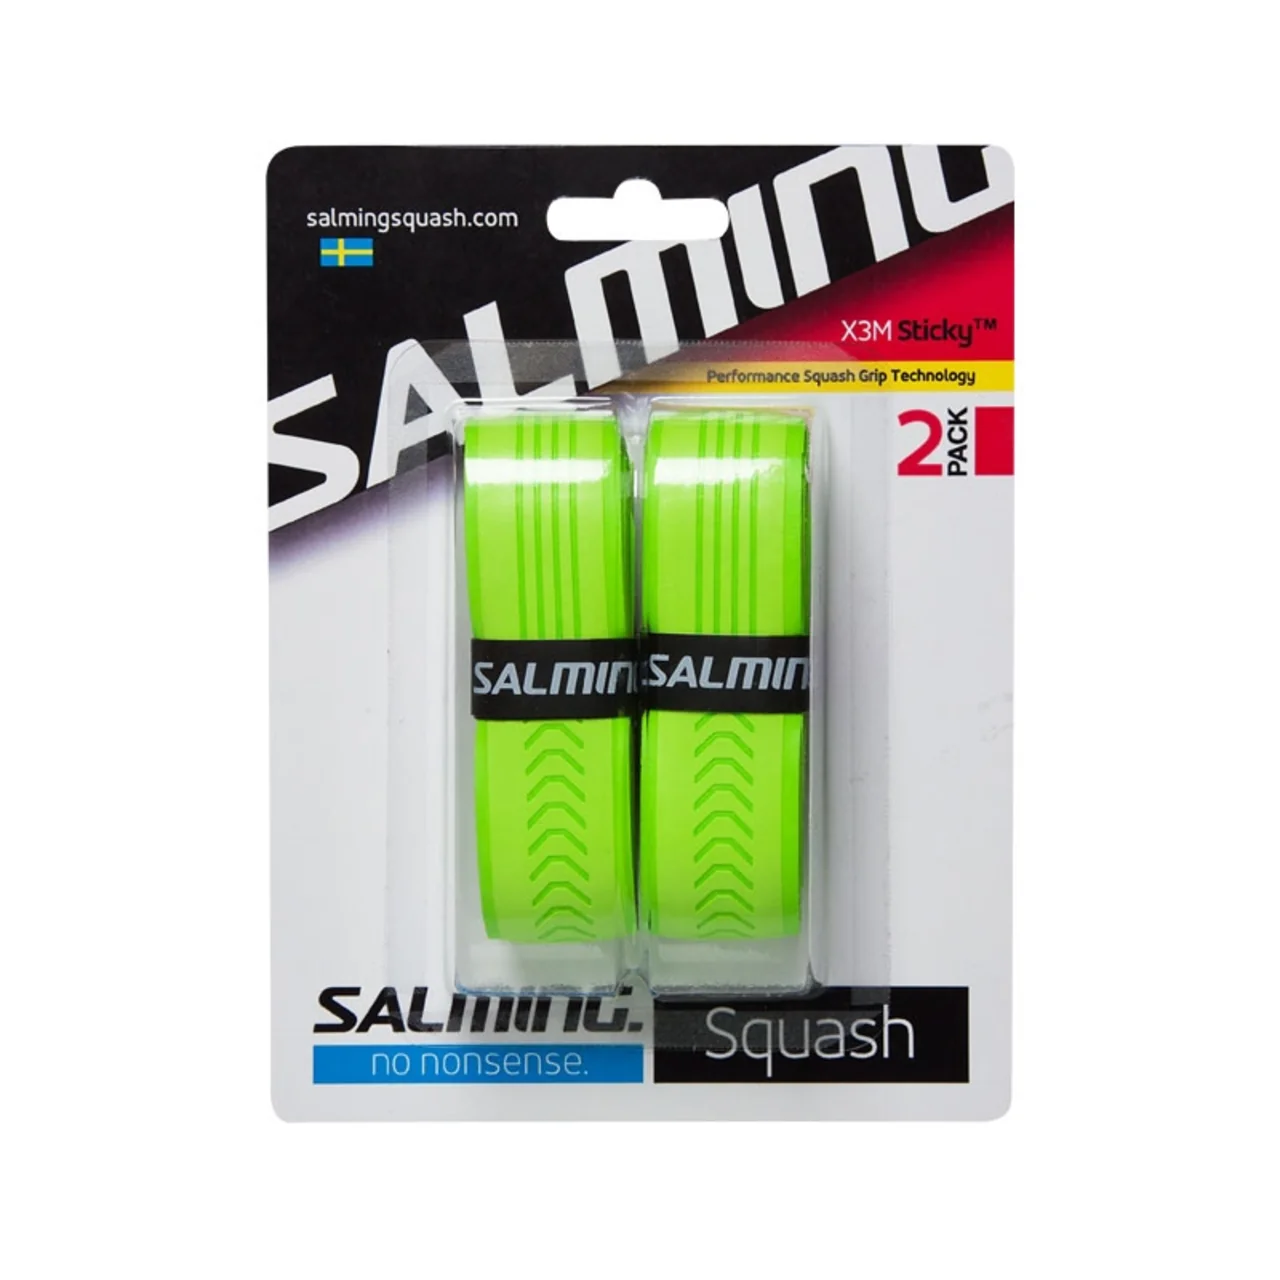 Salming Squash X3M Sticky Grip